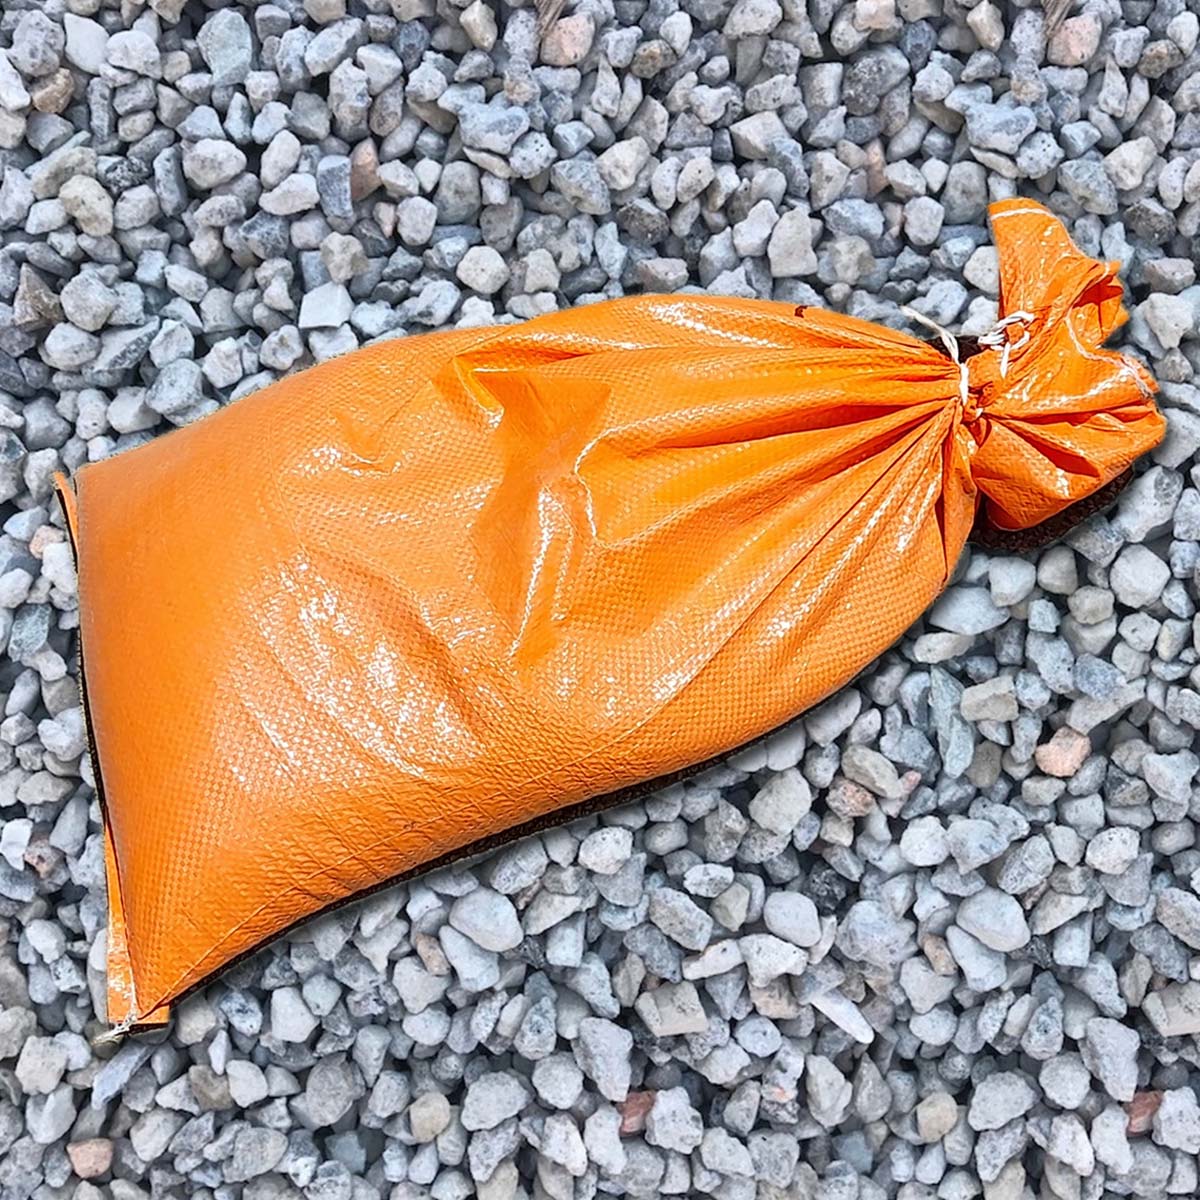 20mm drainage aggregate with orange hi vis sandbags